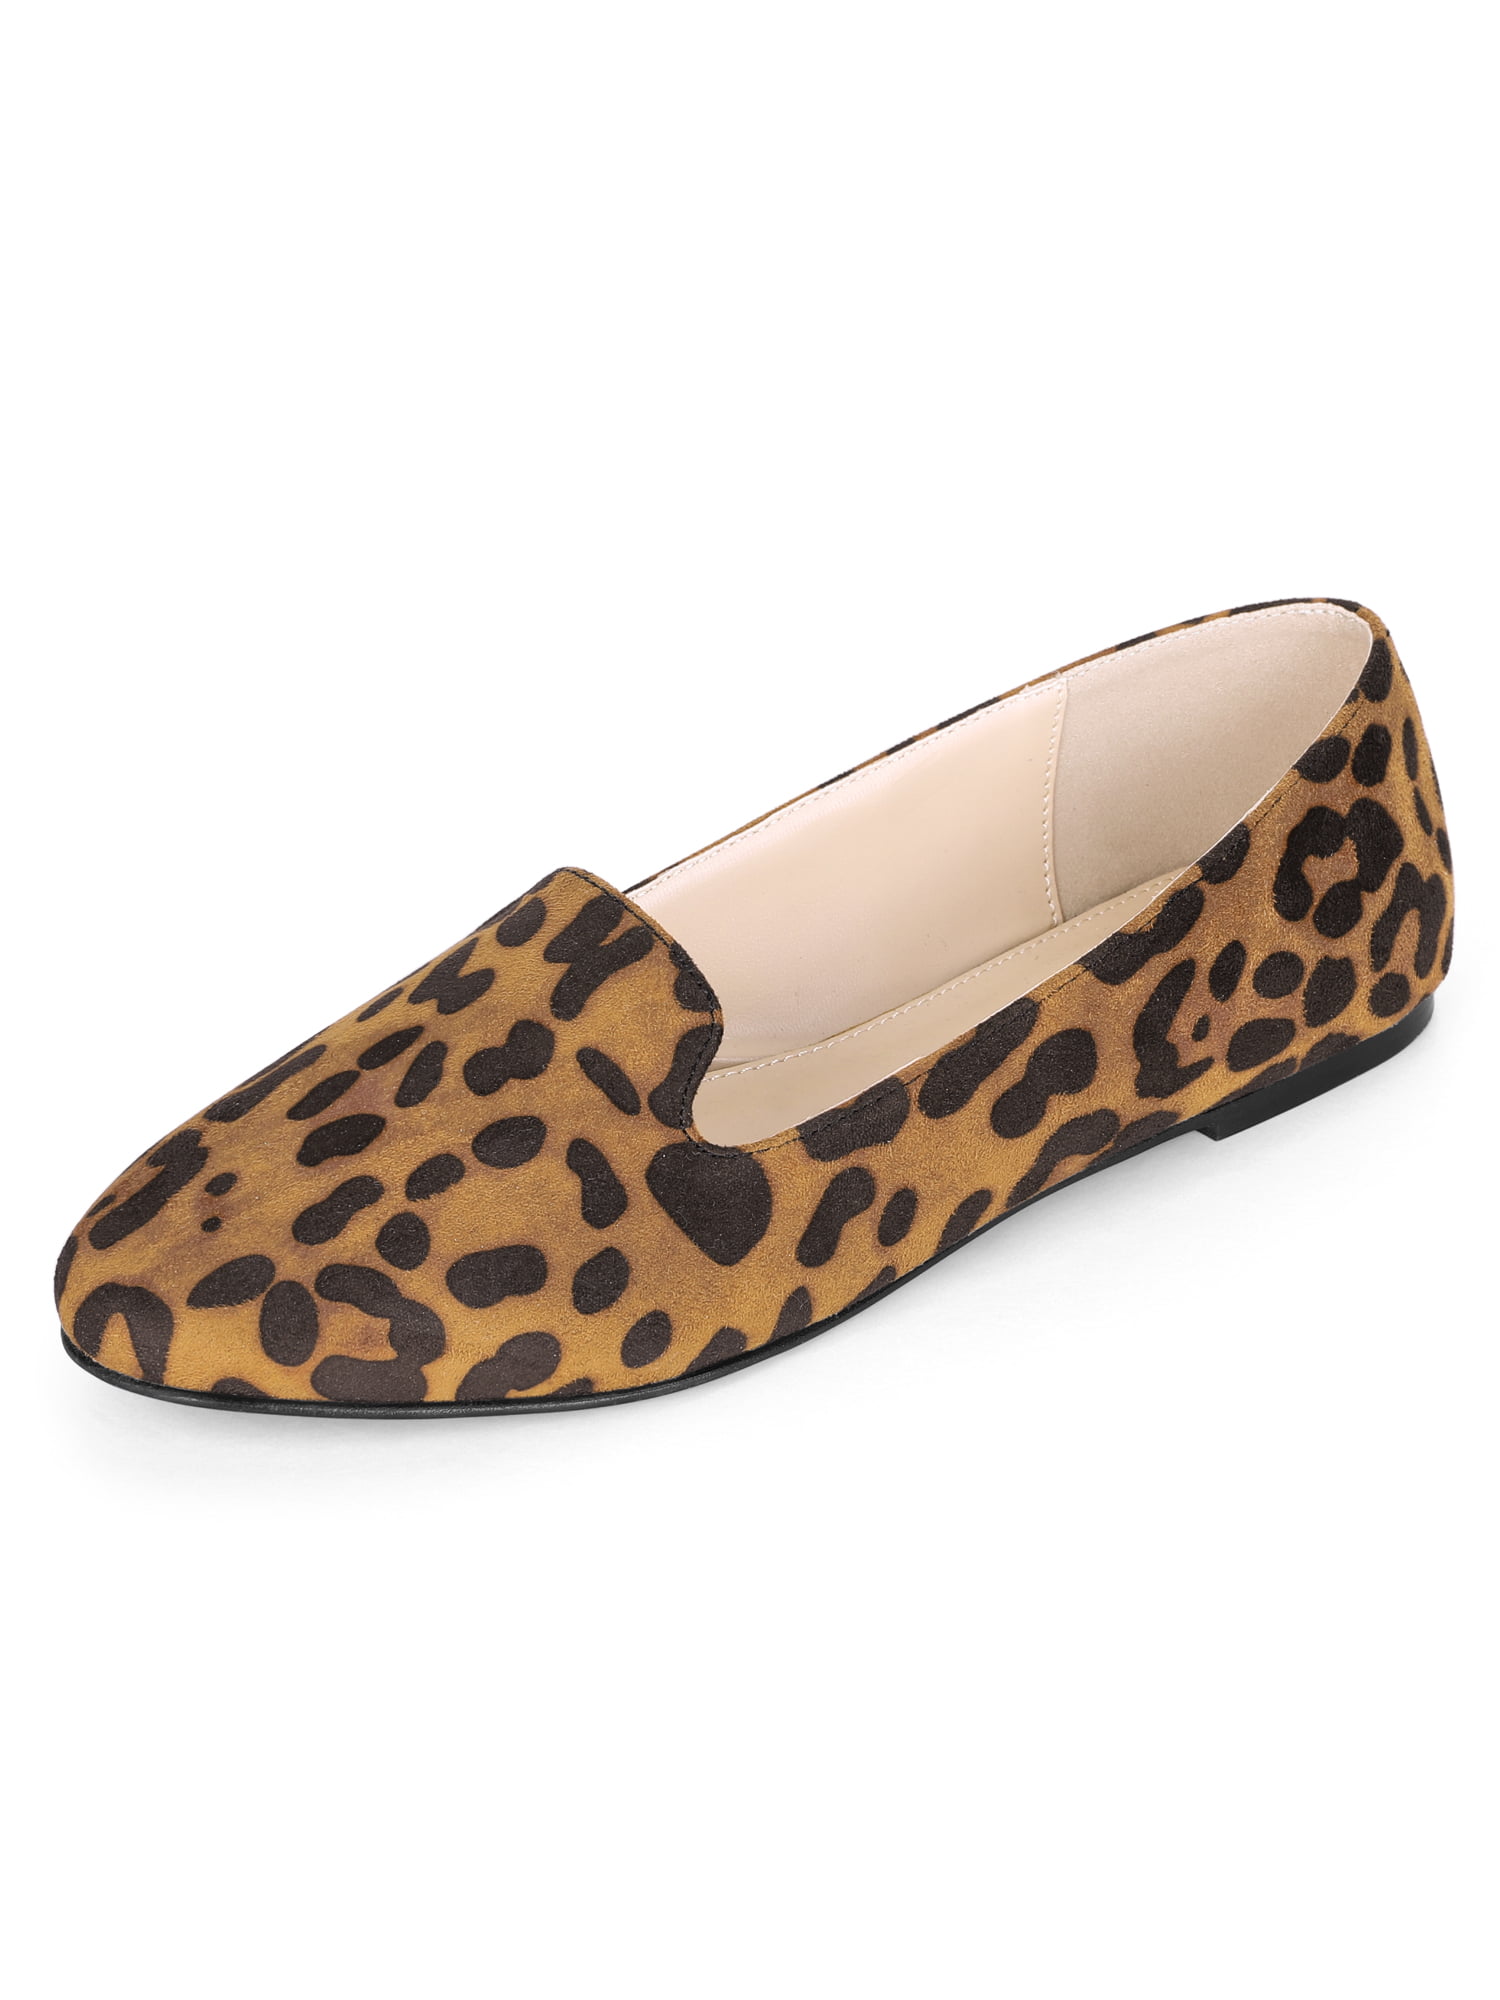 leopard shoes walmart